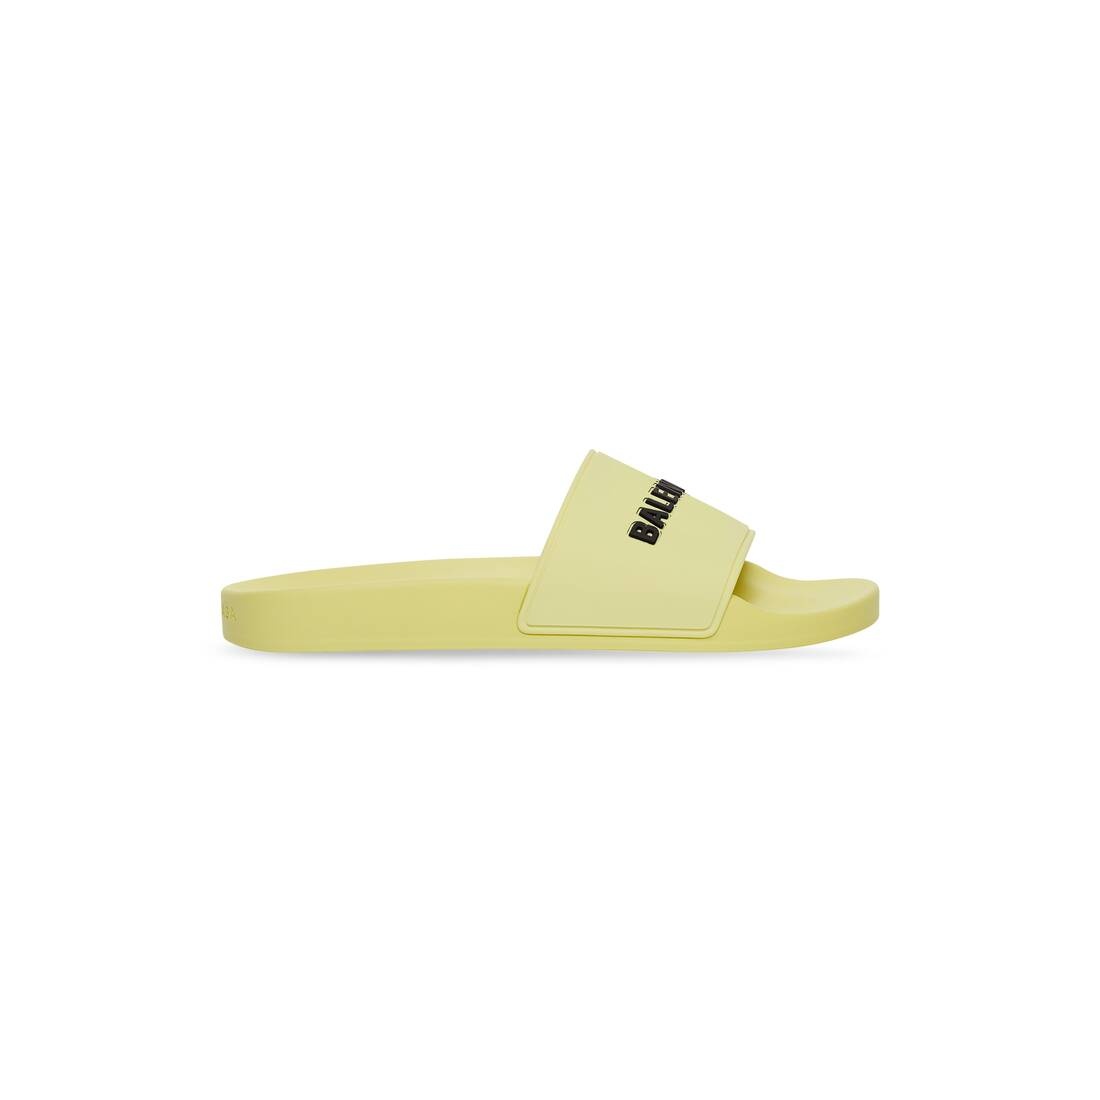 Men's Pool Slide Sandal in Yellow - 1